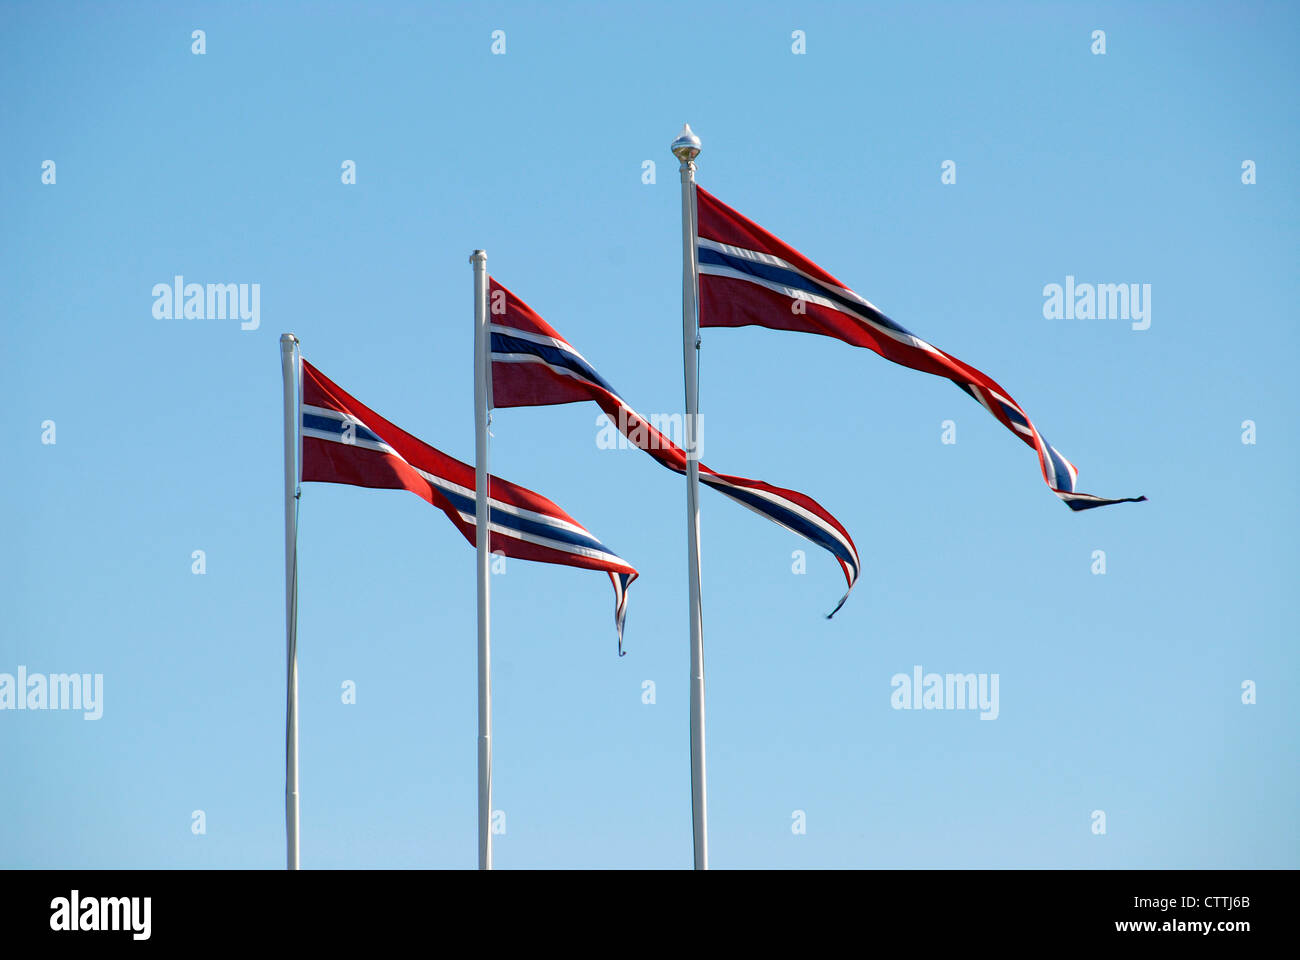 Three Norwegian pennant flags against a blue sky Stock Photo